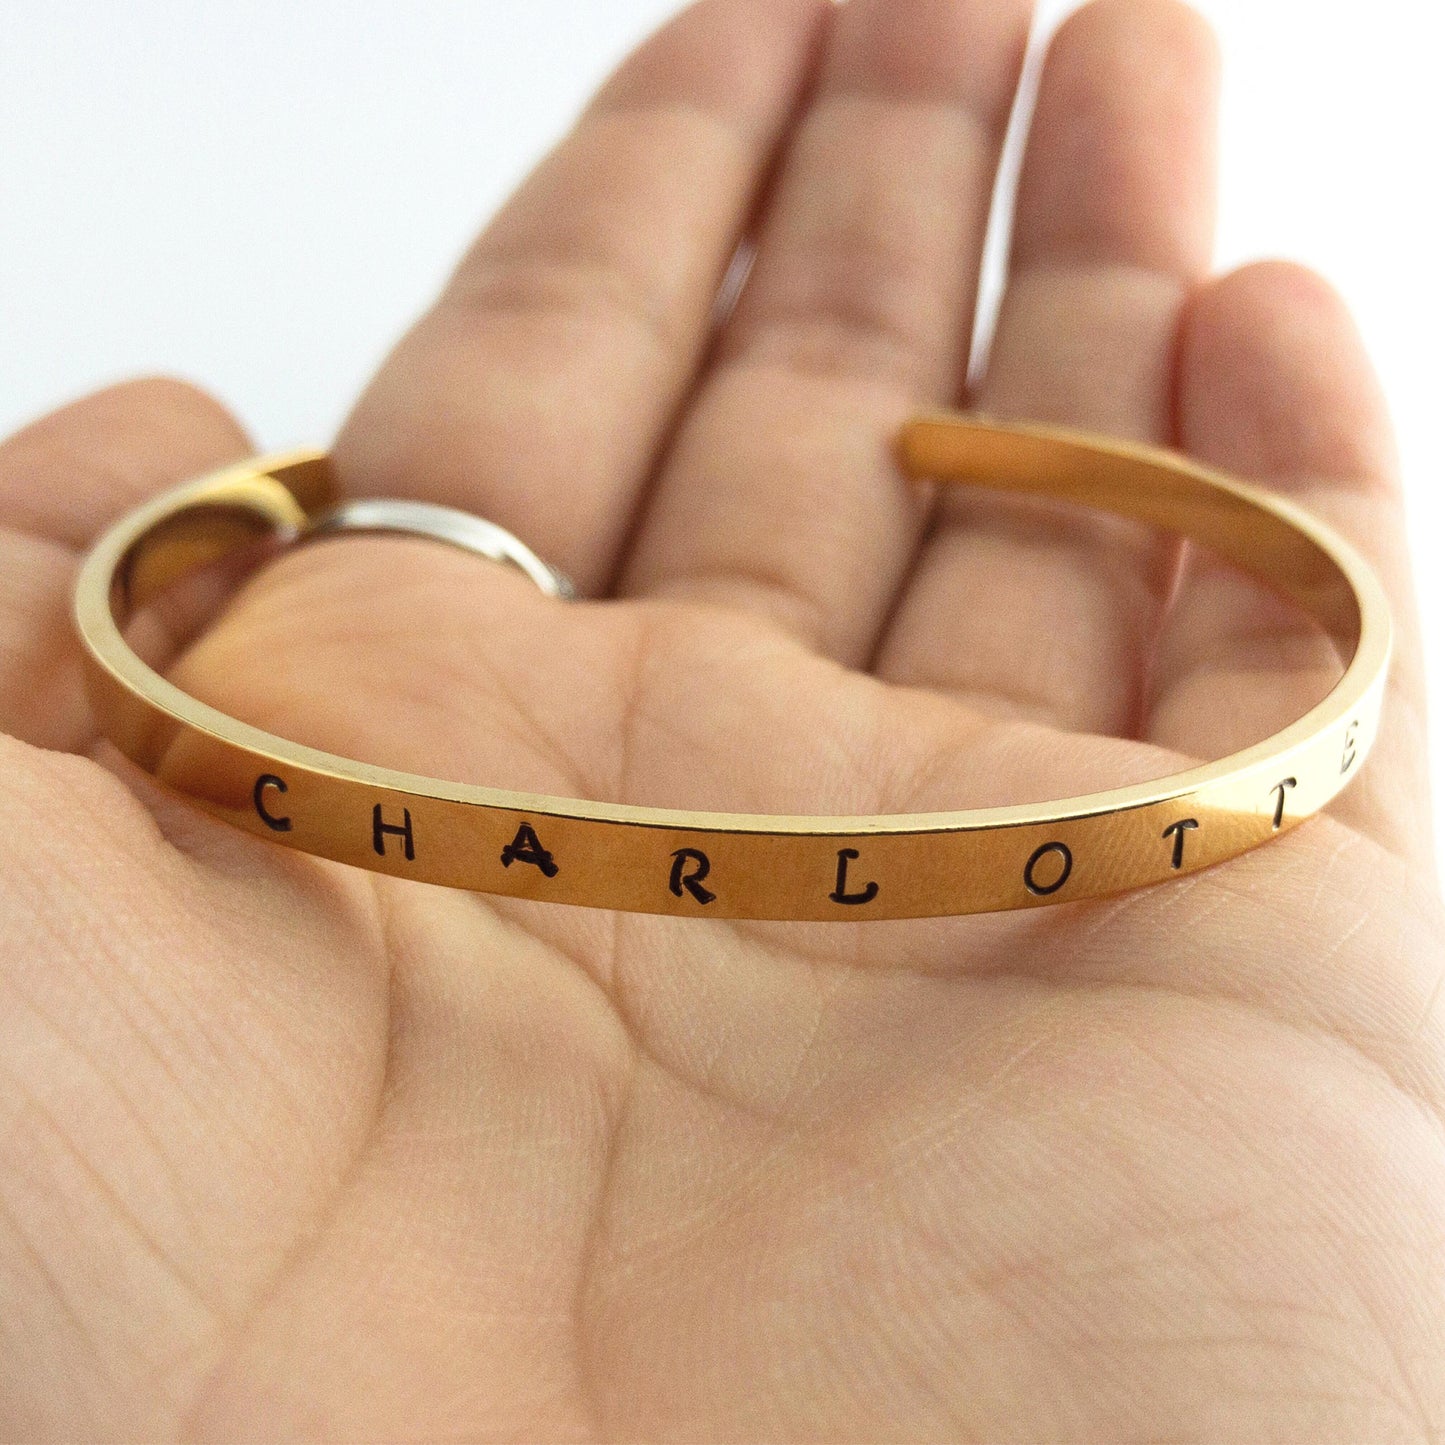 Cuff Bracelets - Personalized Jewelry